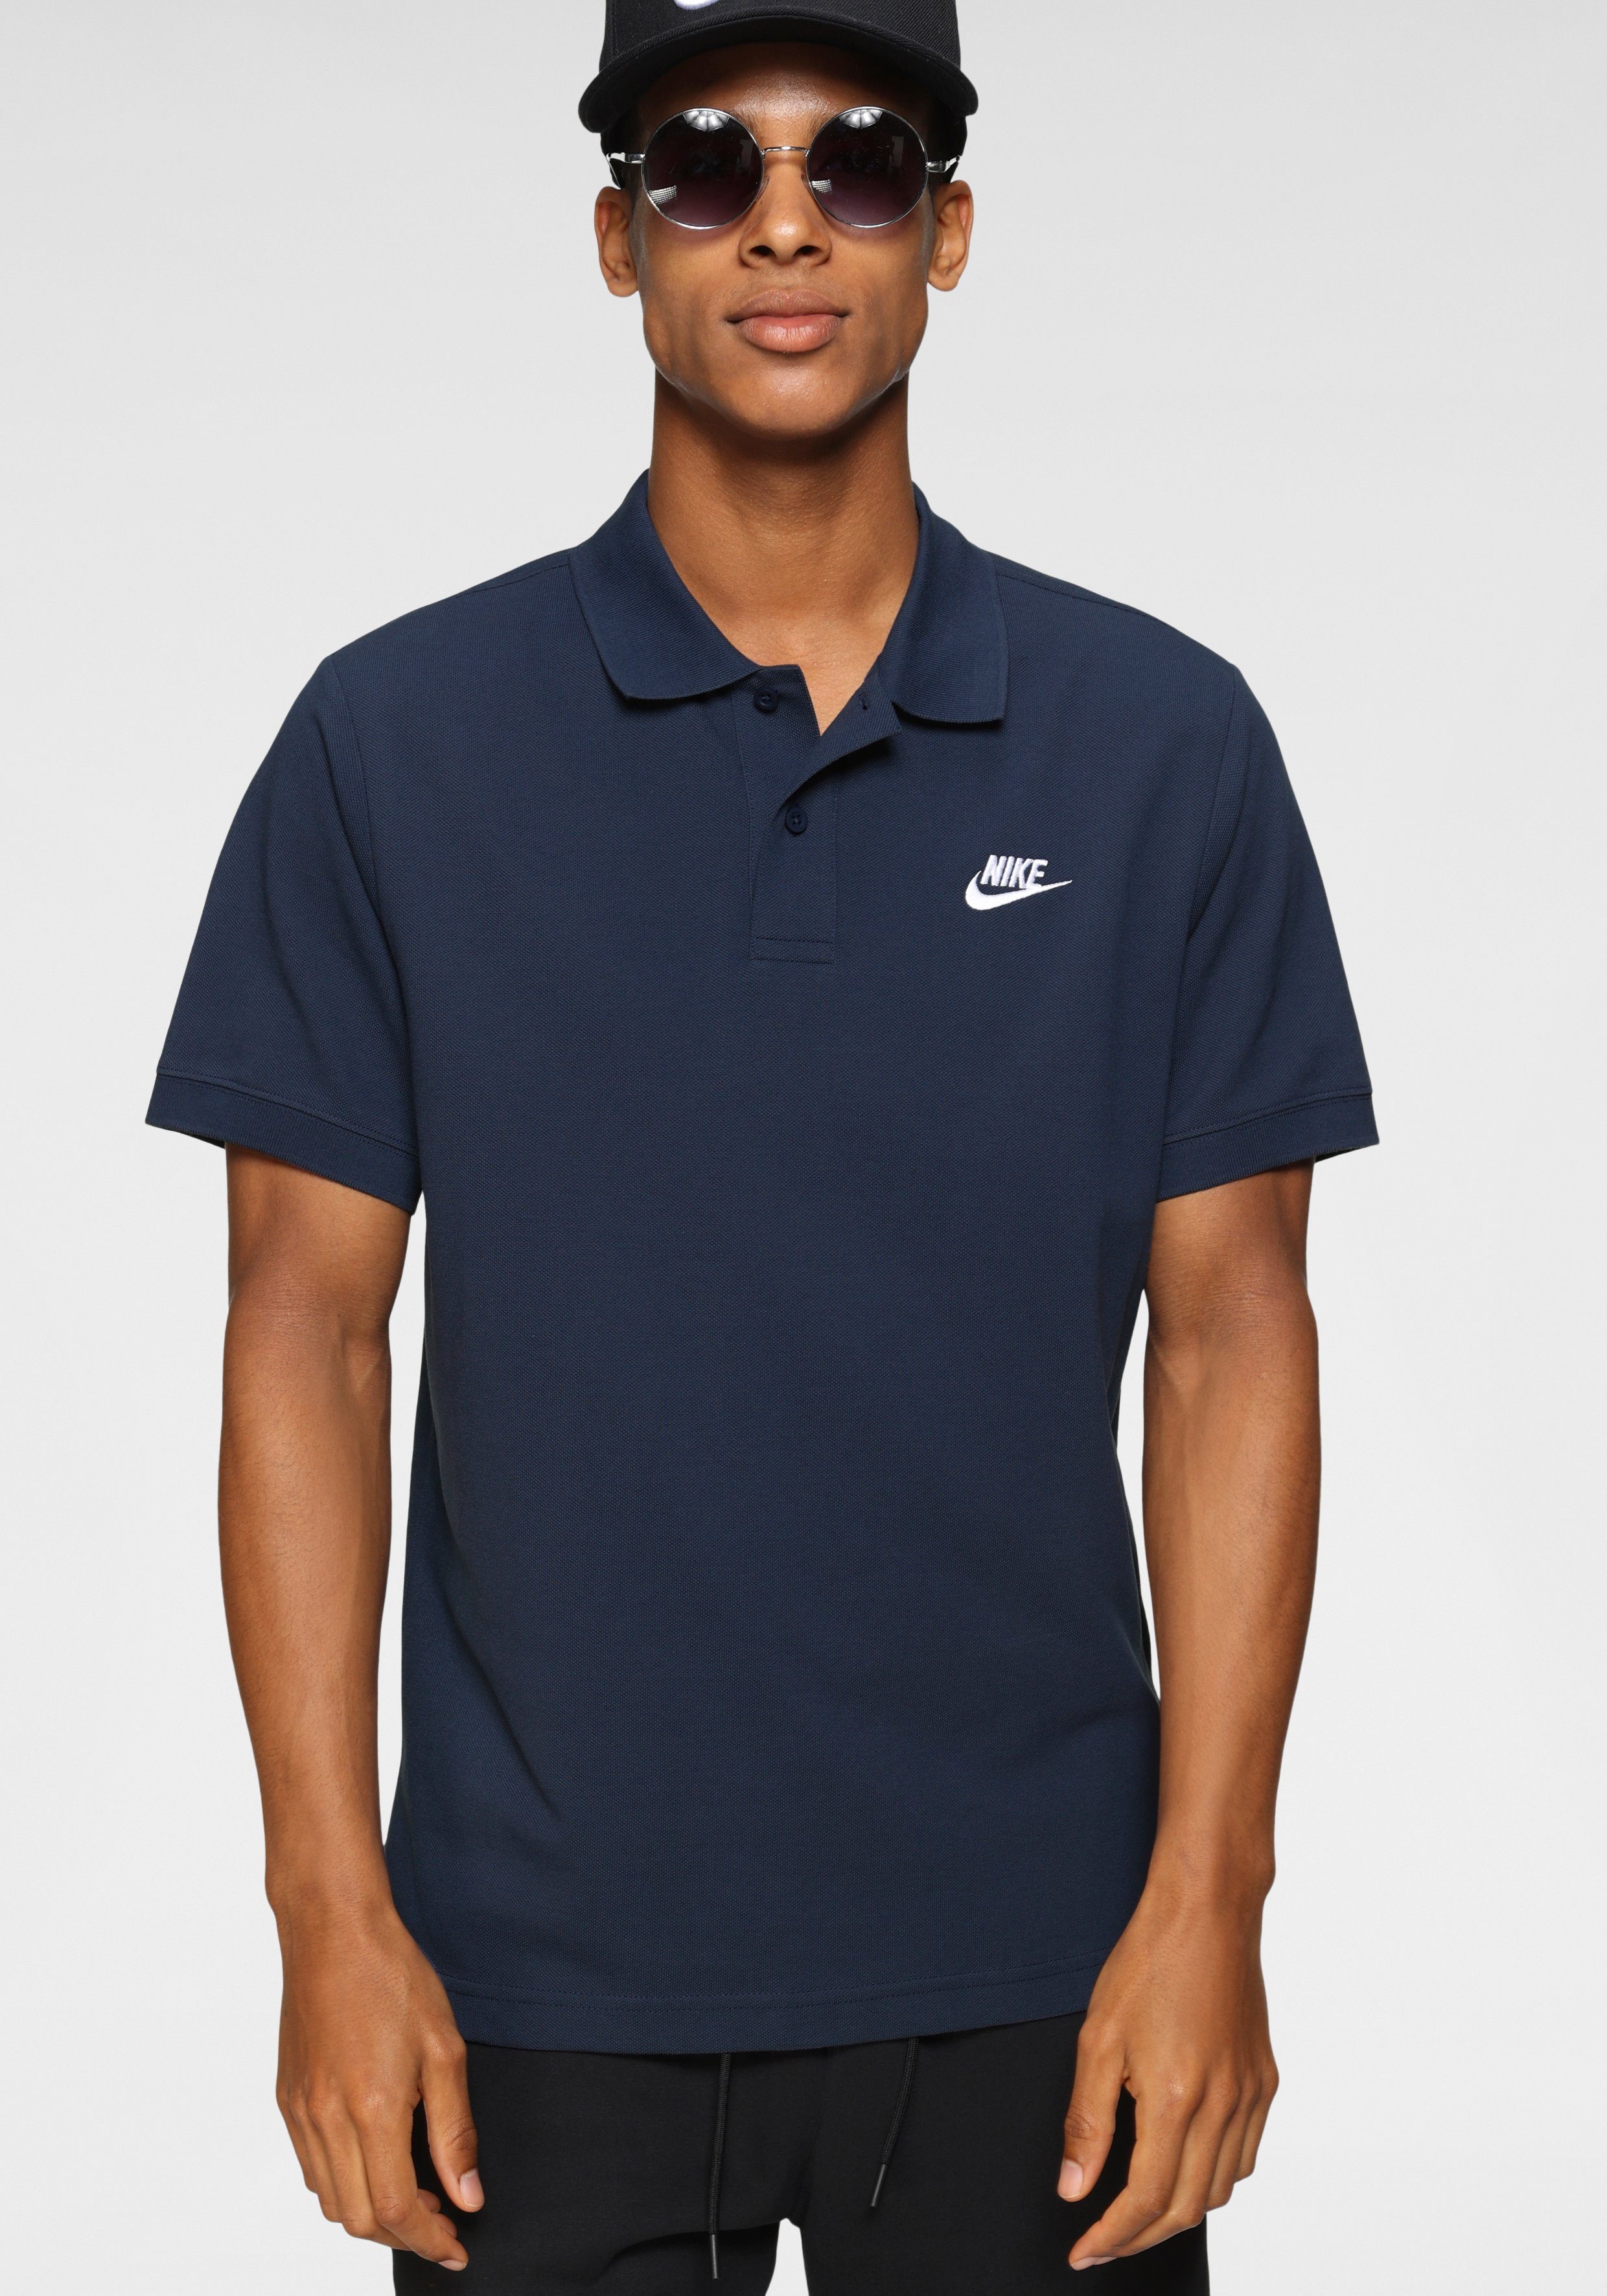 Nike Poloshirts online kaufen » Polohemden | OTTO